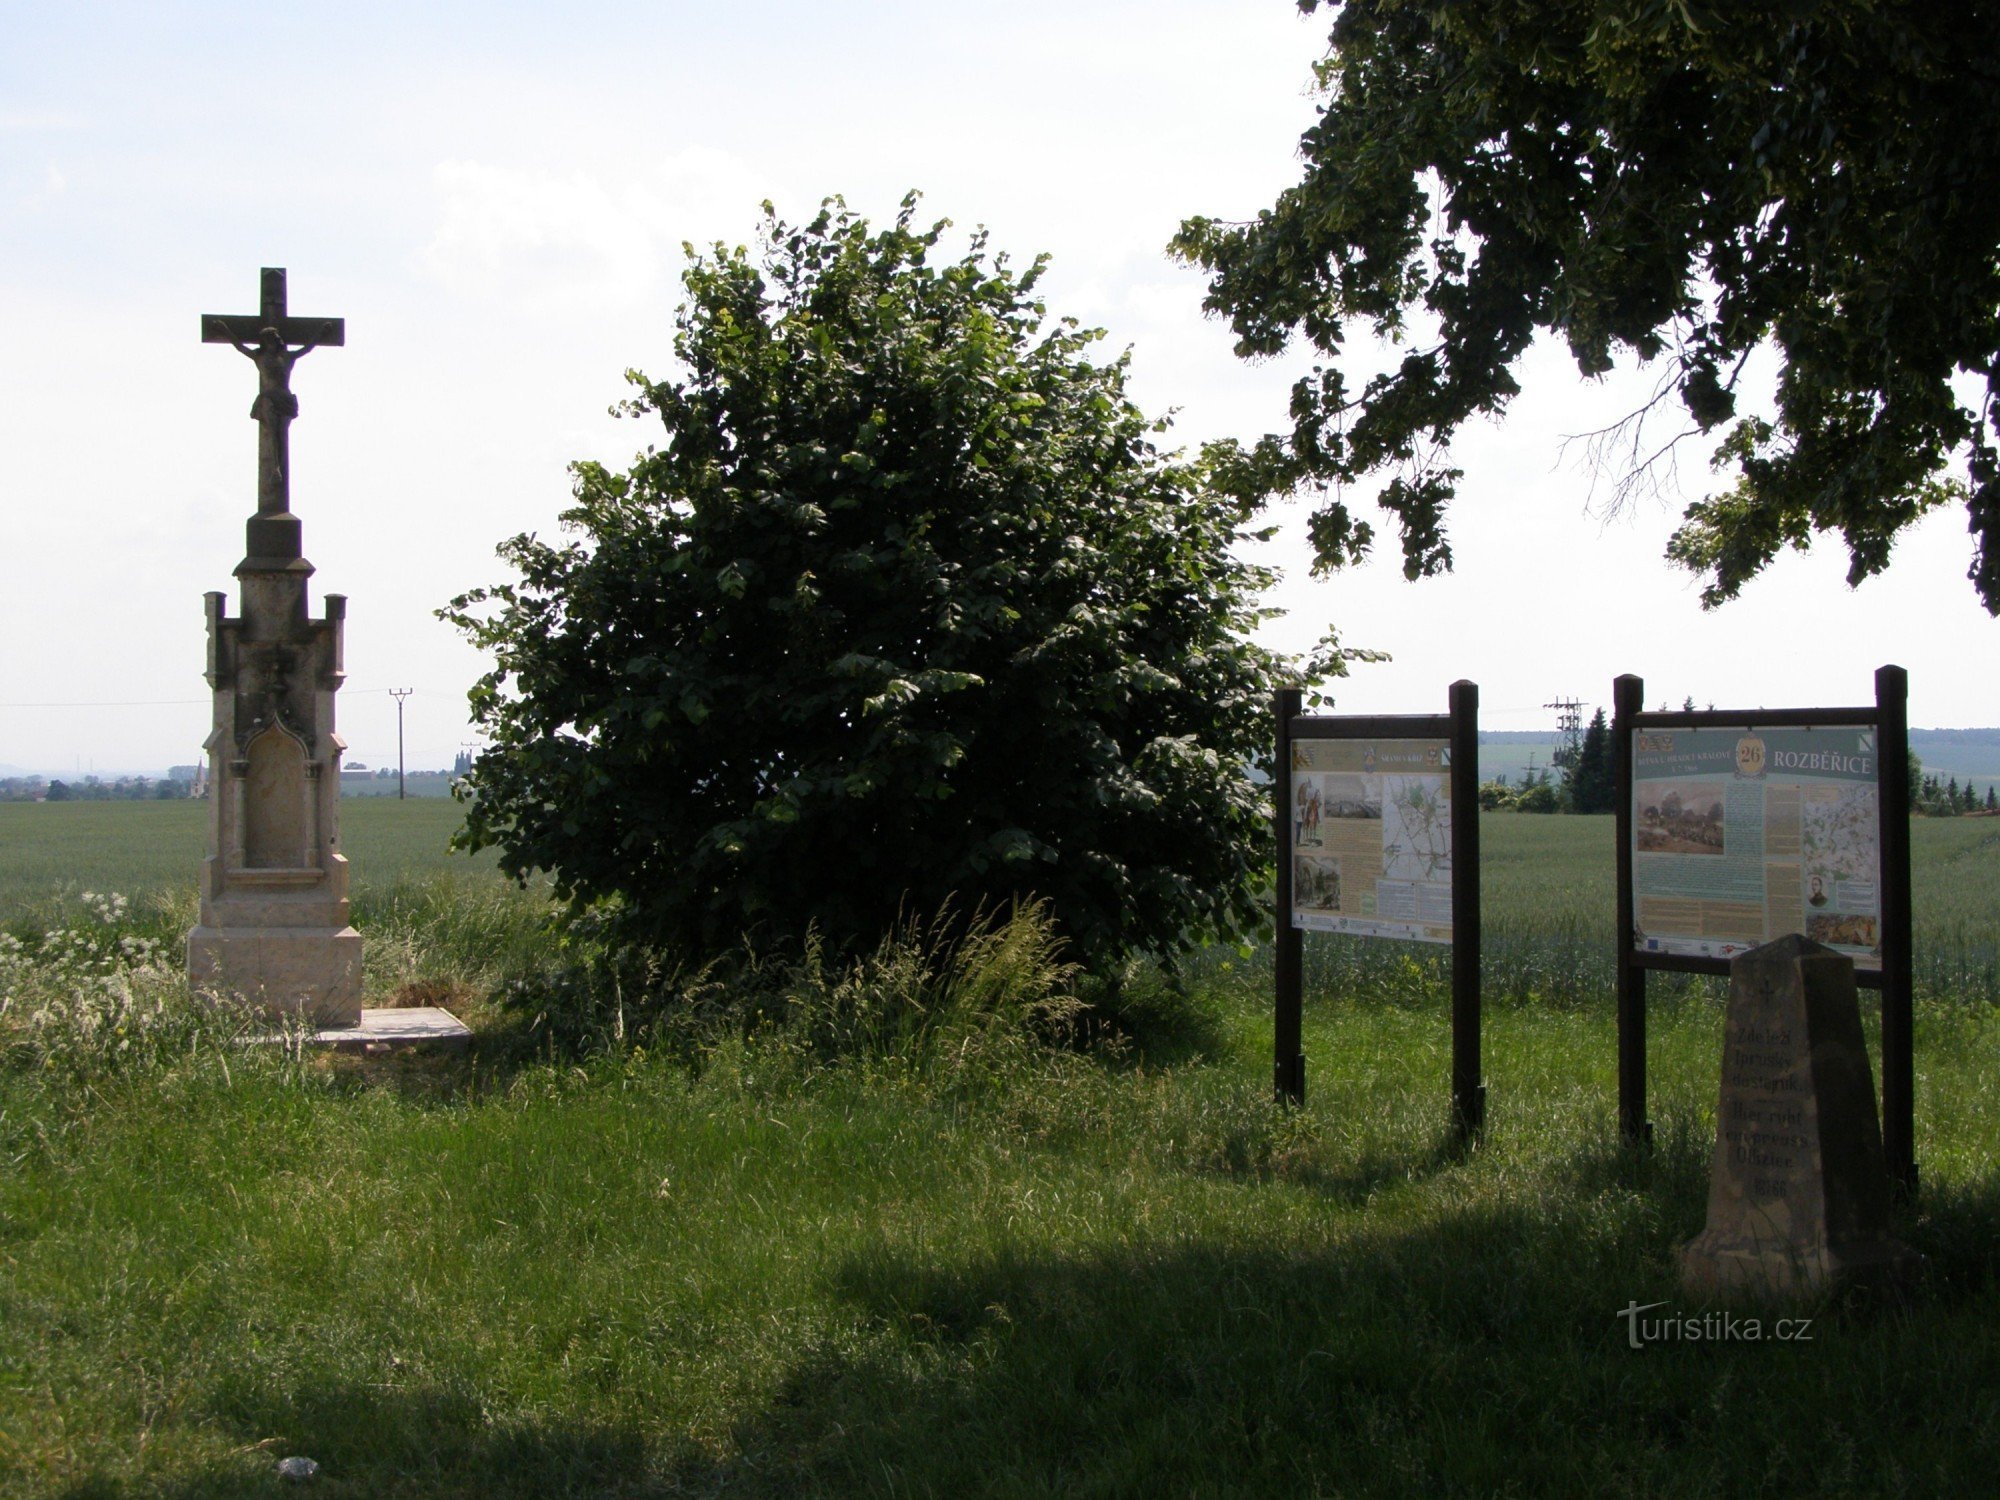 Rozběřice tourist crossroads - near Šrám's cross